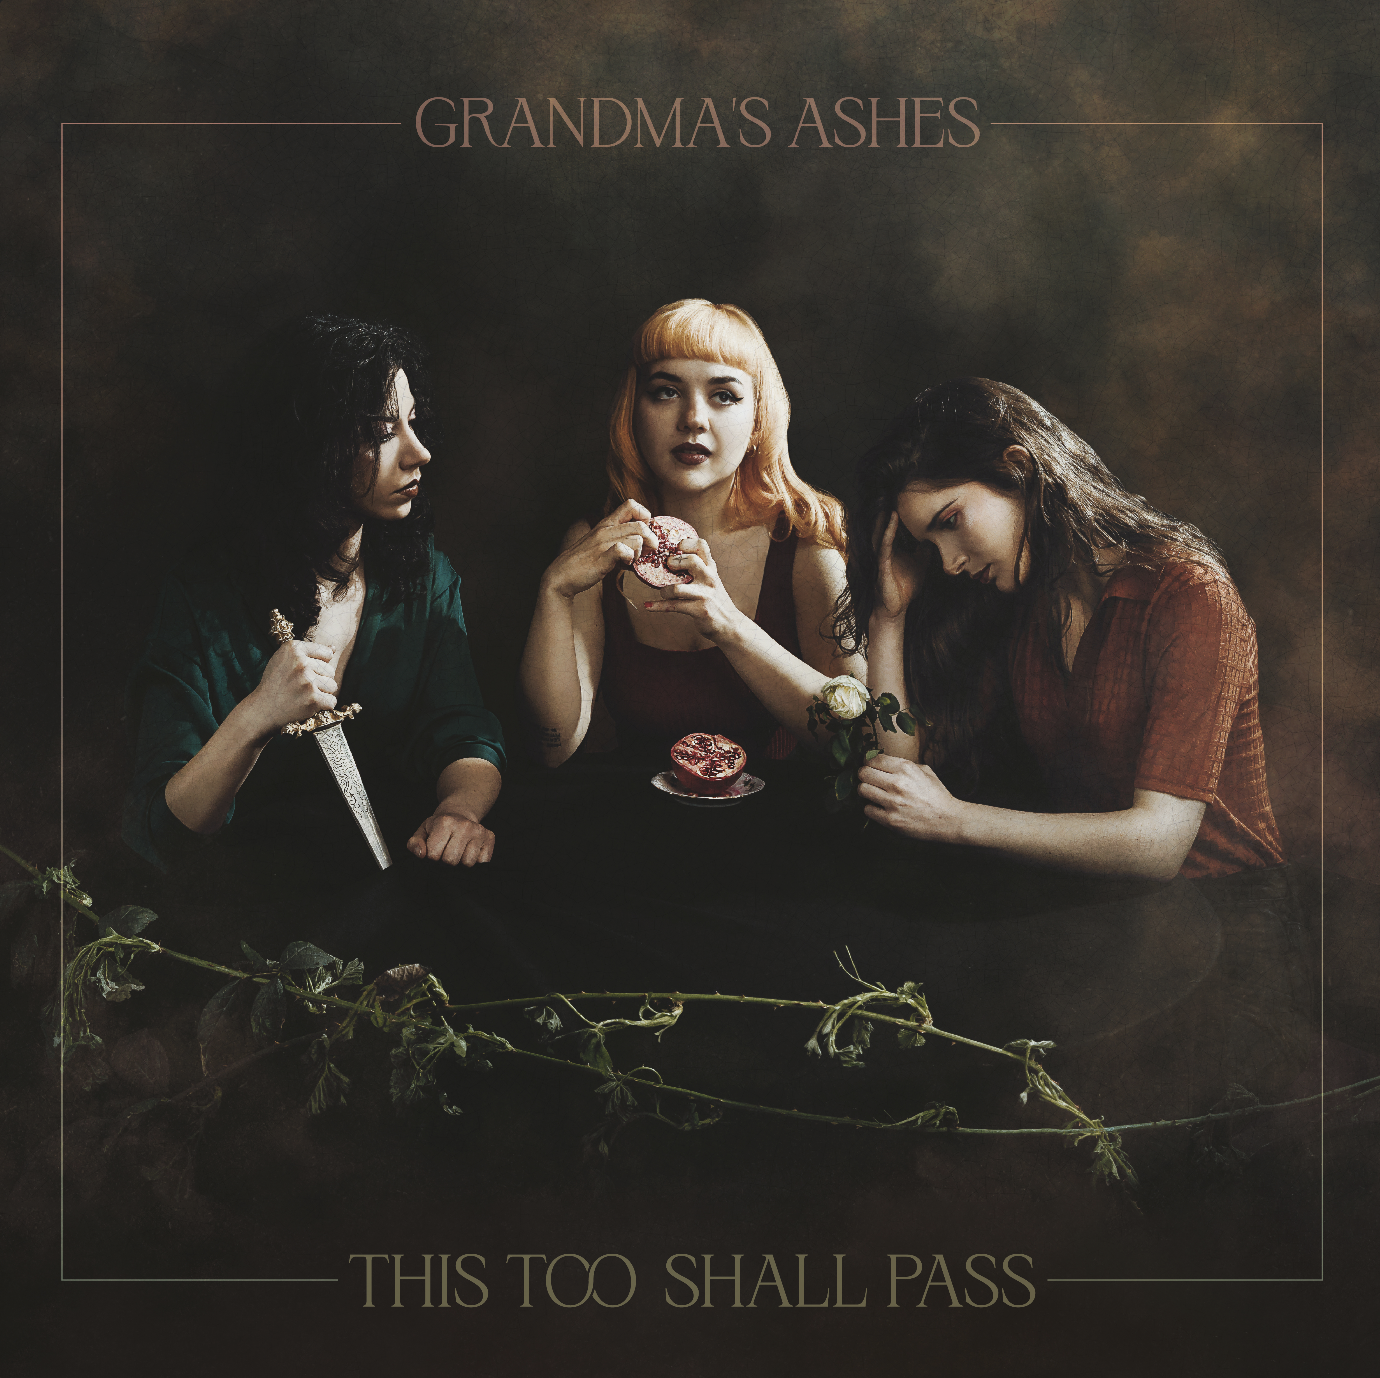 Grandma ashes artwork